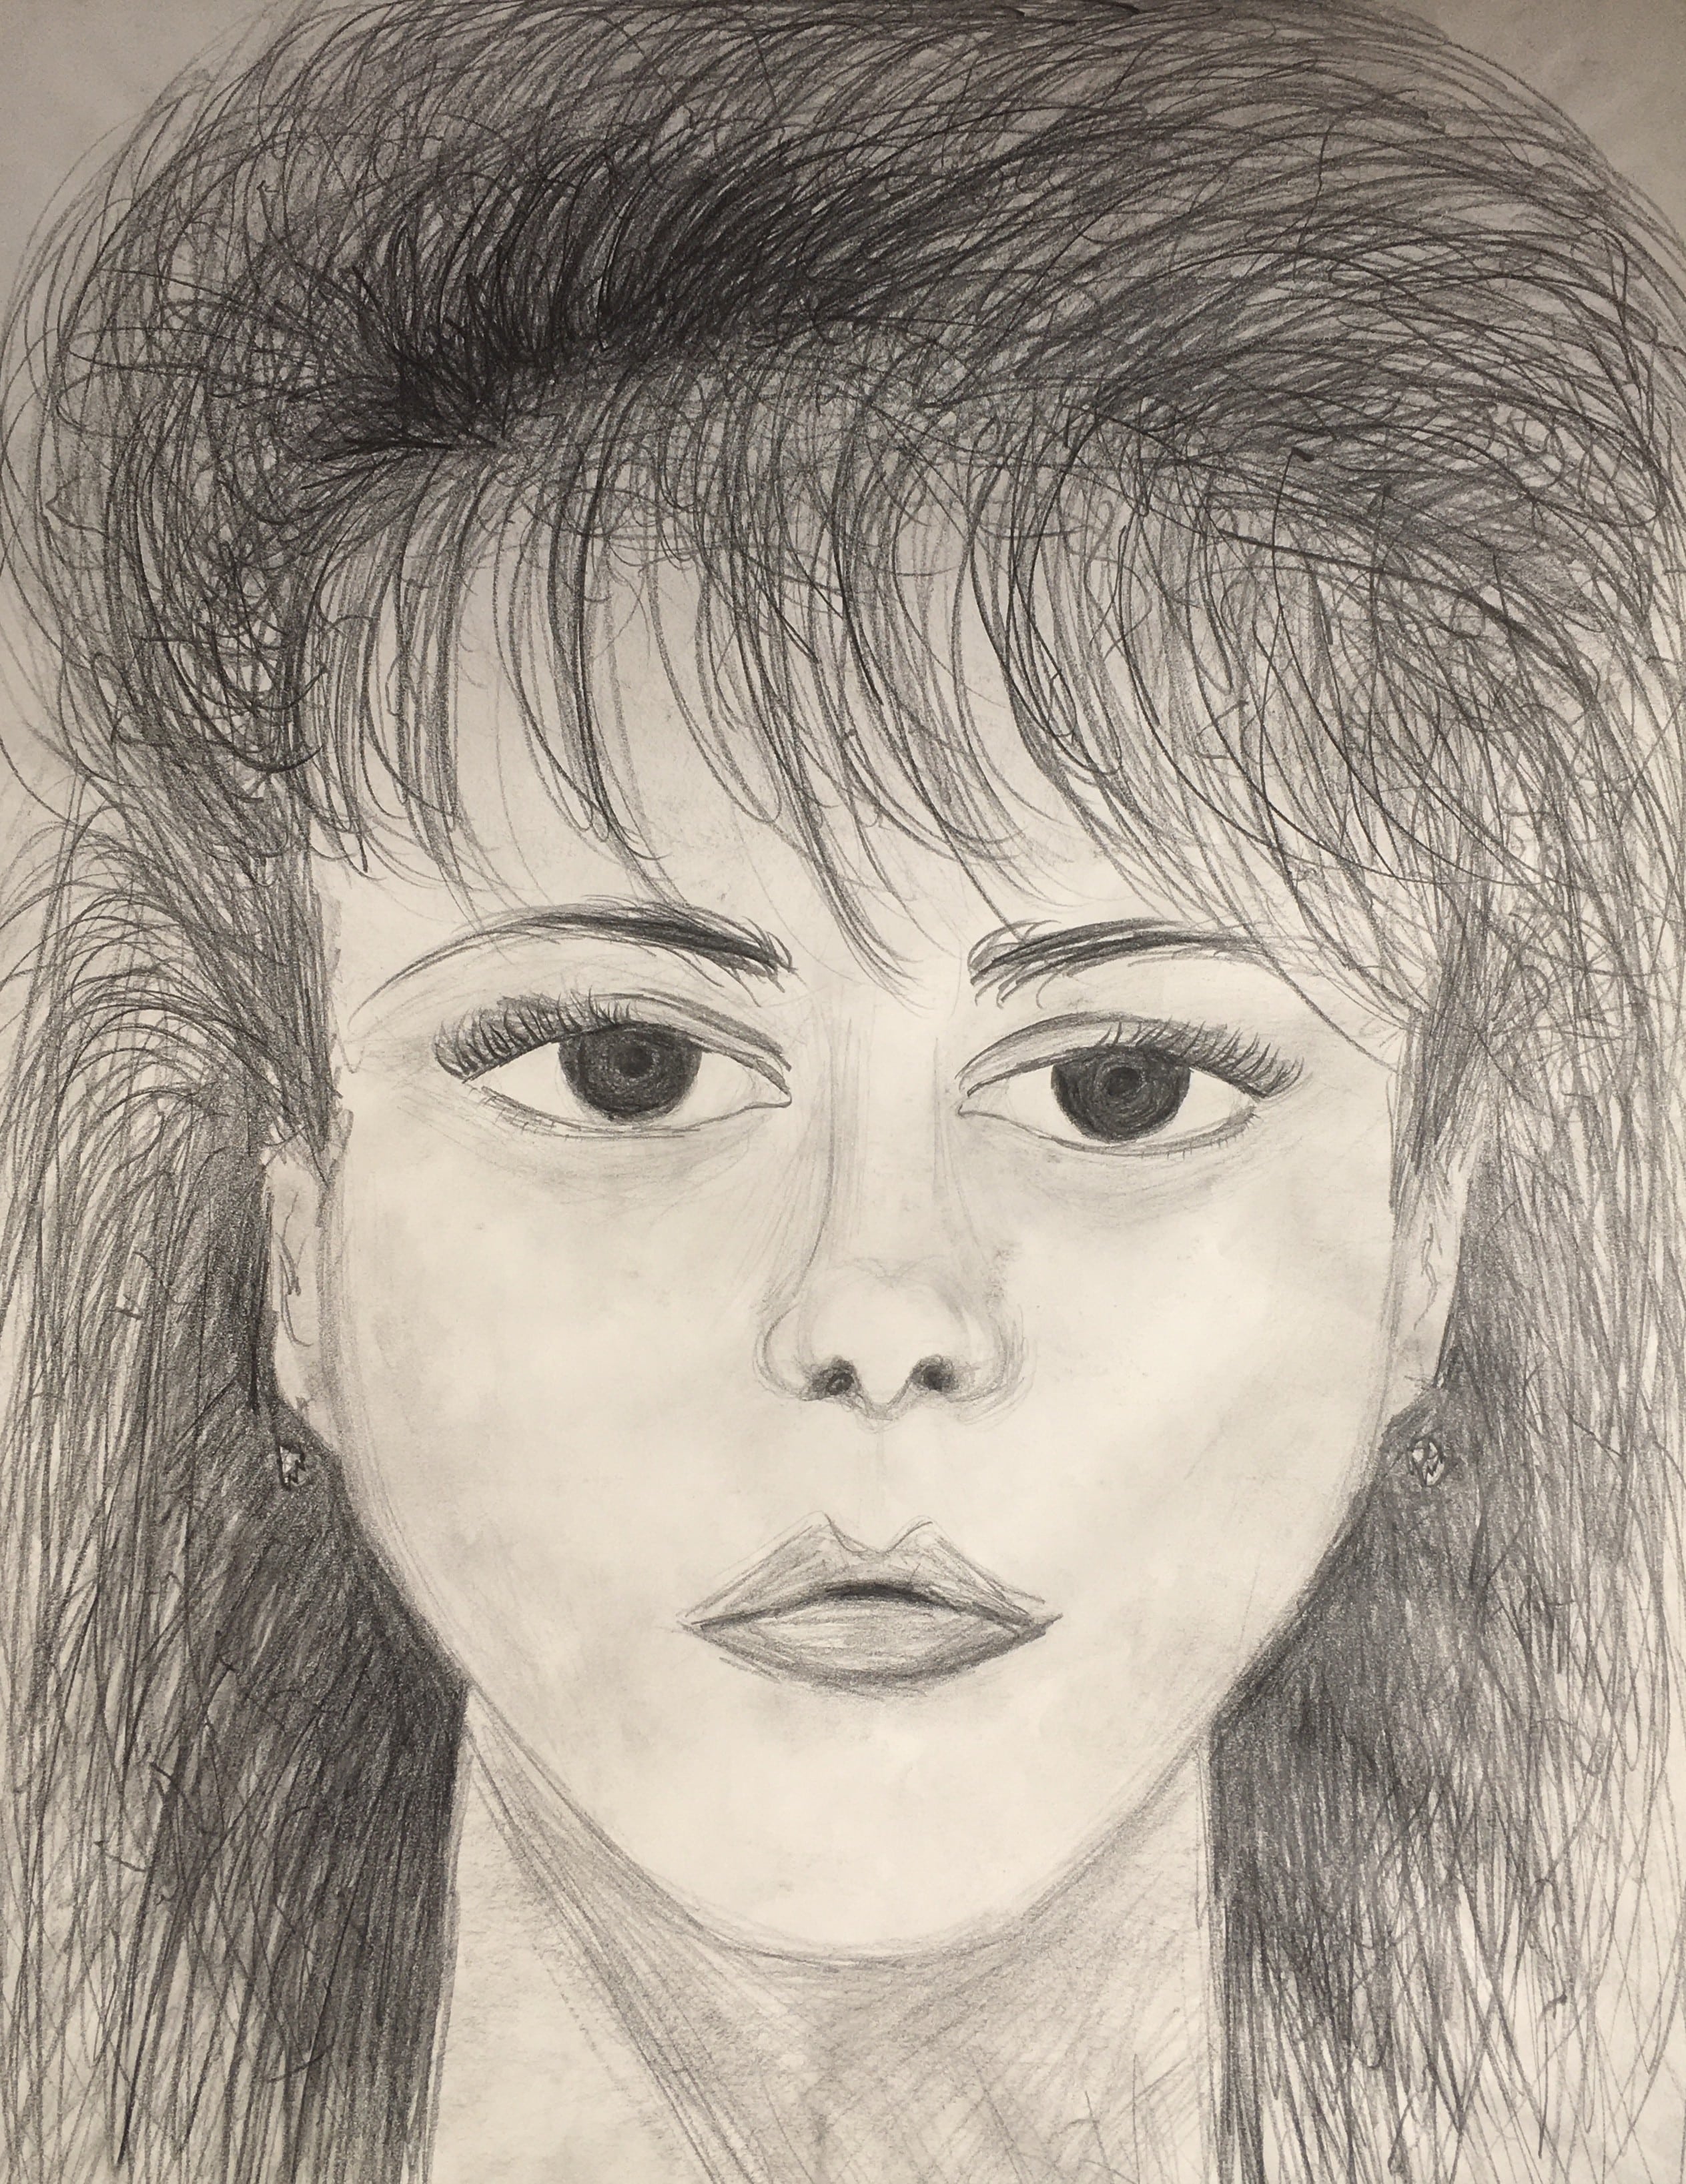 Self Portrait, 1990
Pencil on Paper
18"W x 24"H, Walli White, artist